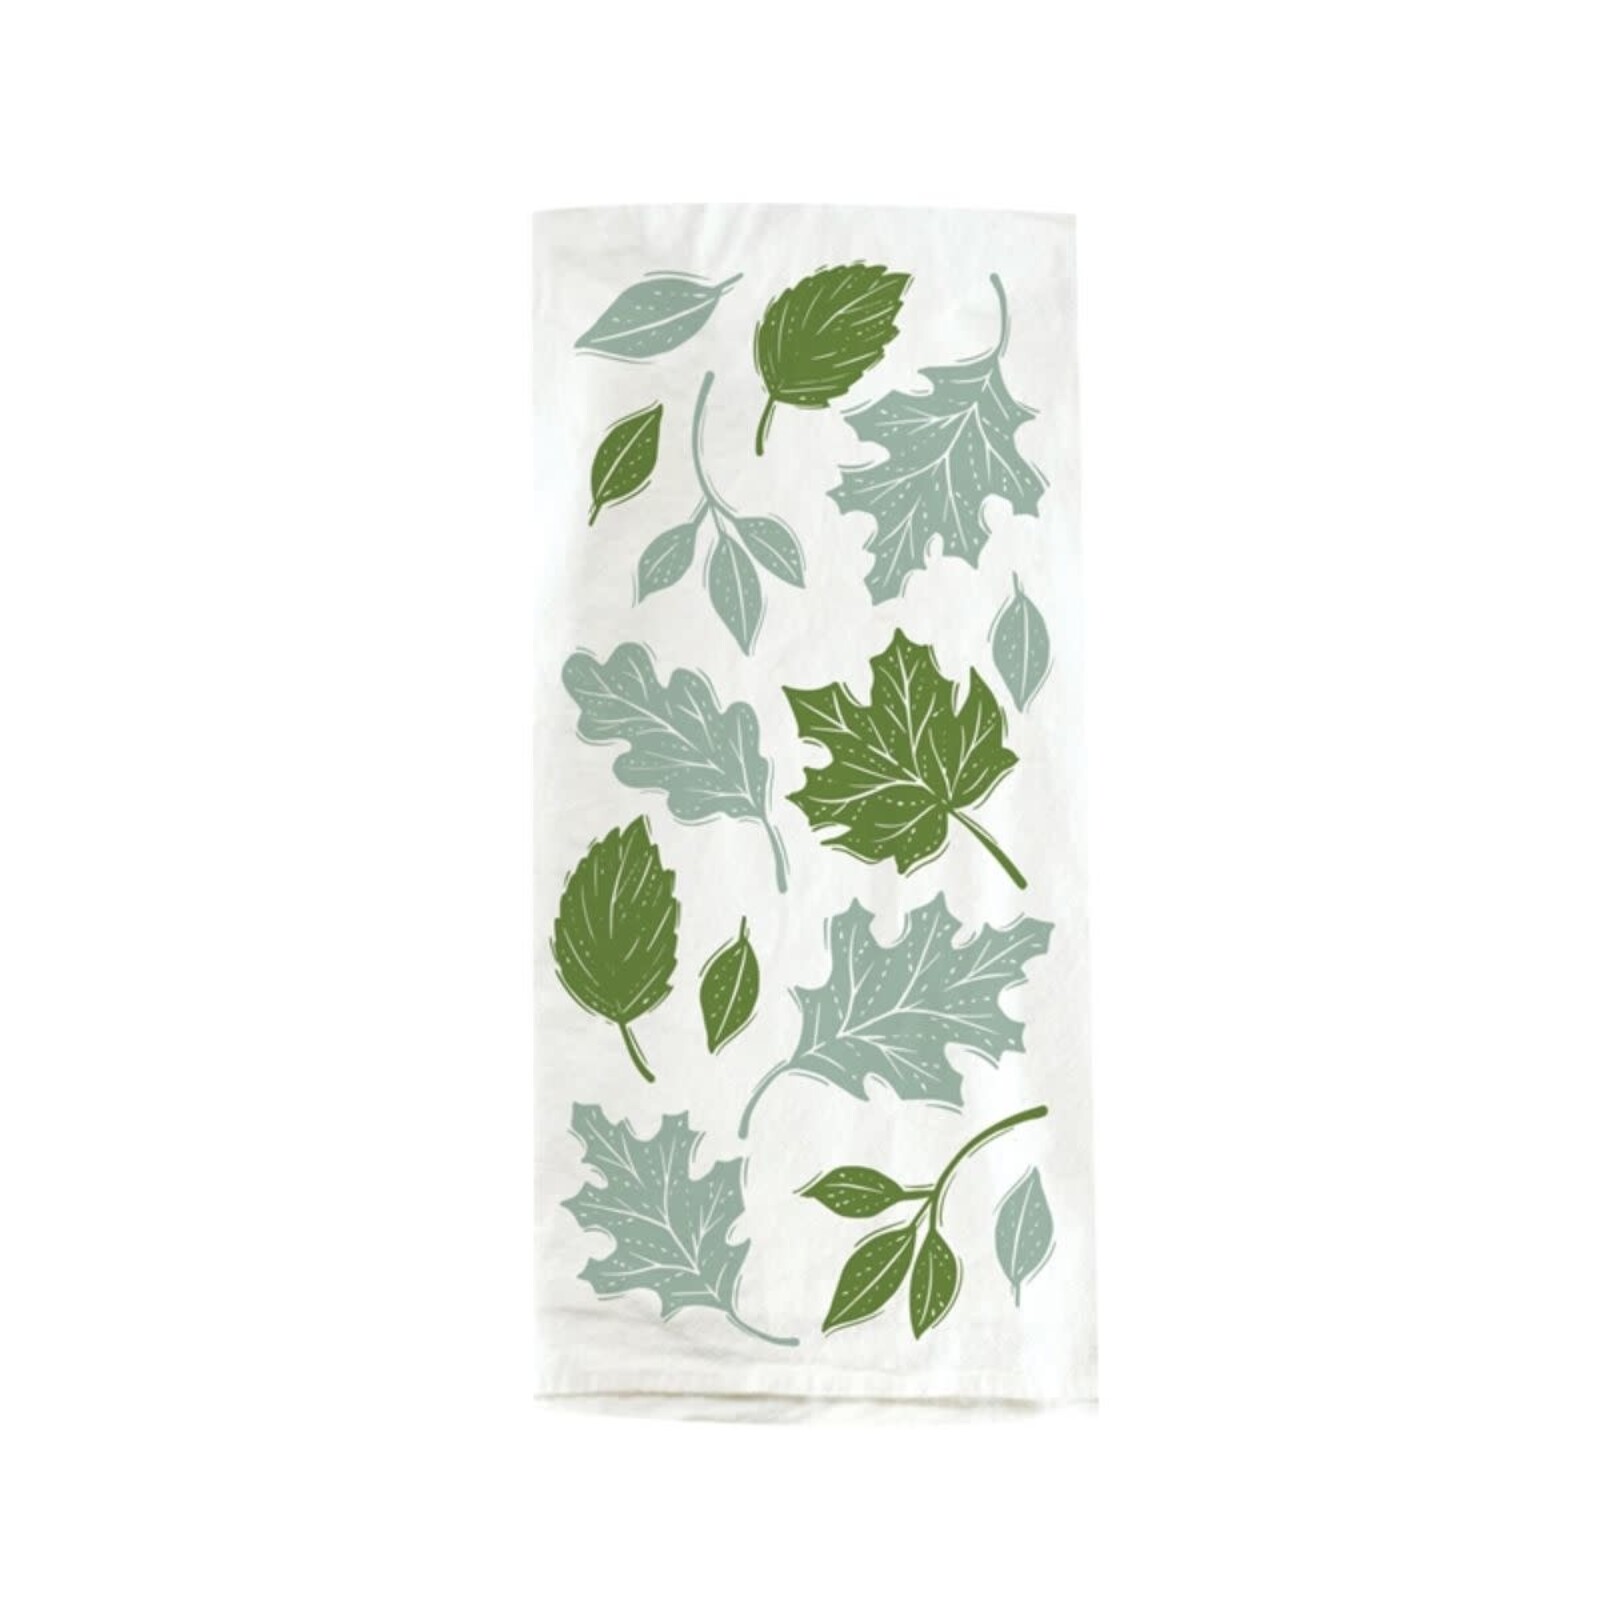 Evergreen Enterprises Flour Sack Towel Gift Set with Wooden Spoon  Harvest  4FS7882 loading=